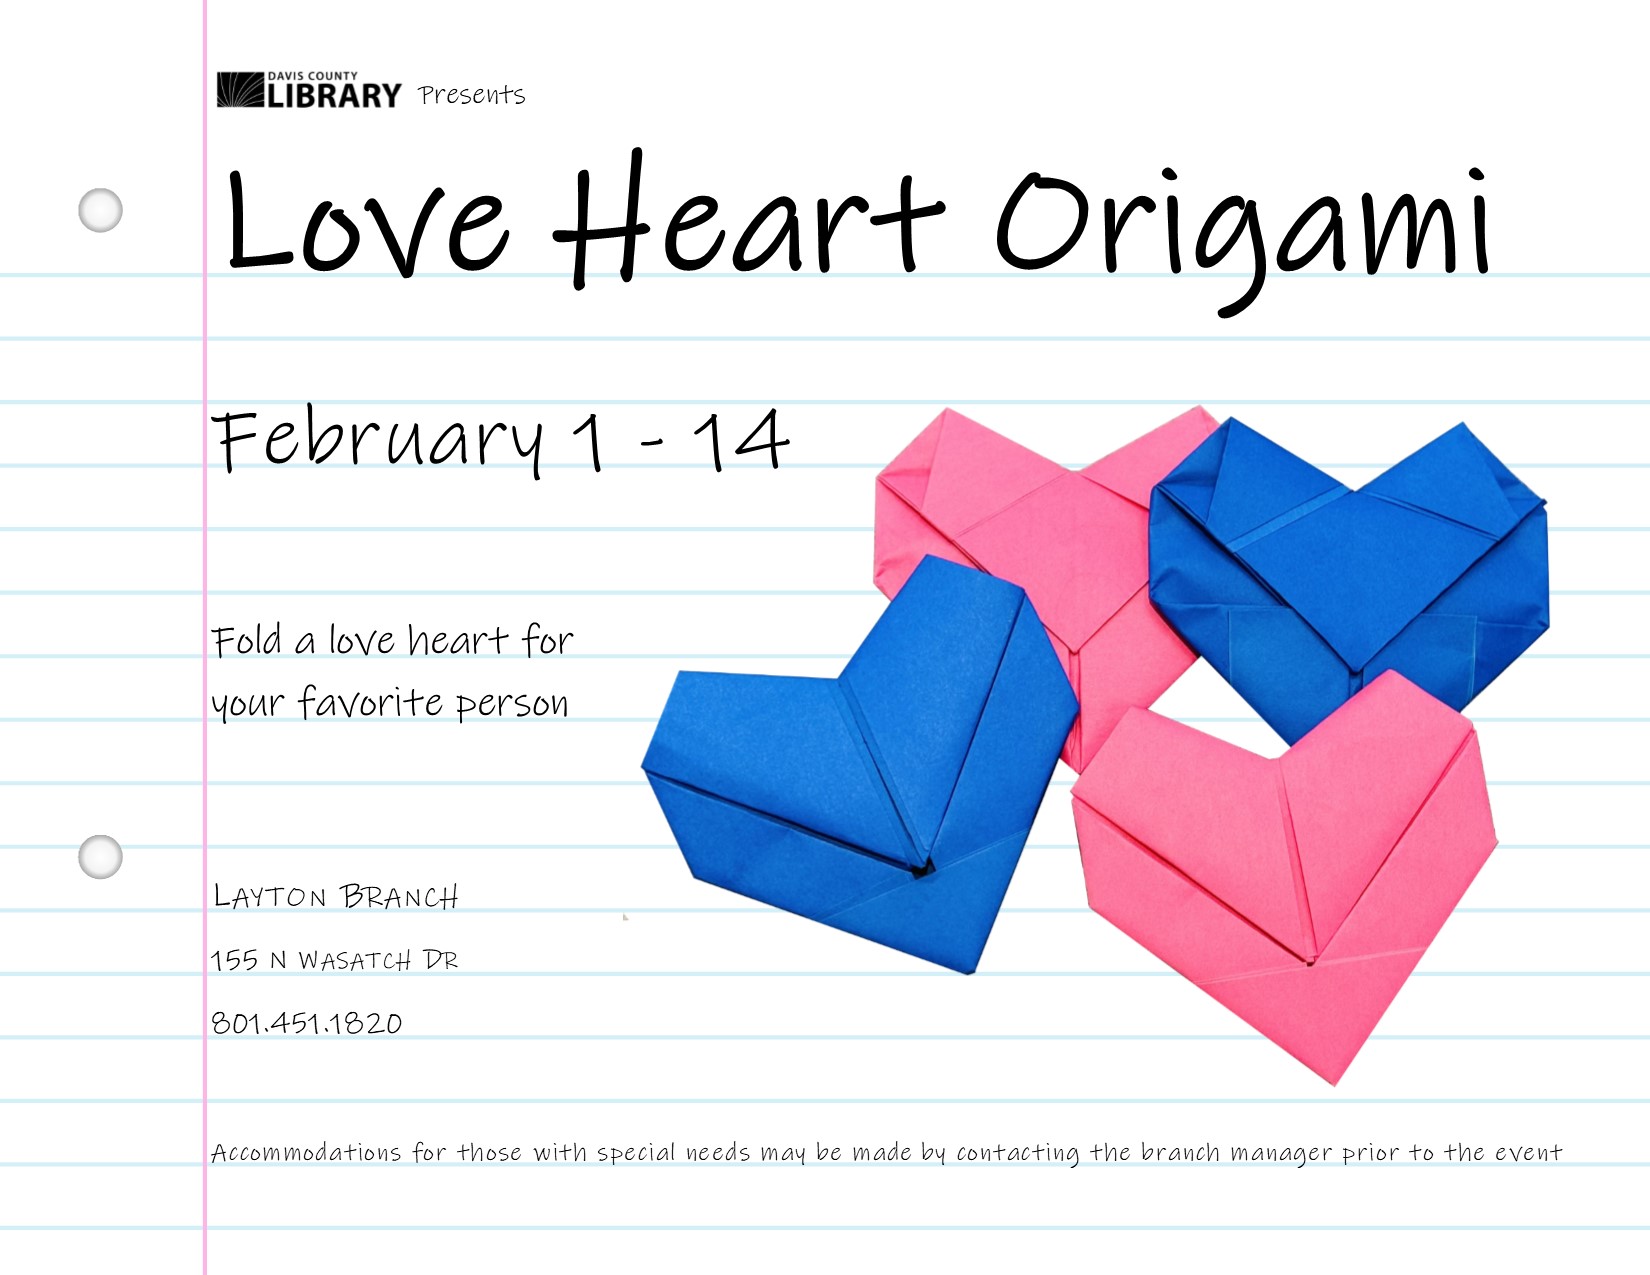 Four folded hearts. 